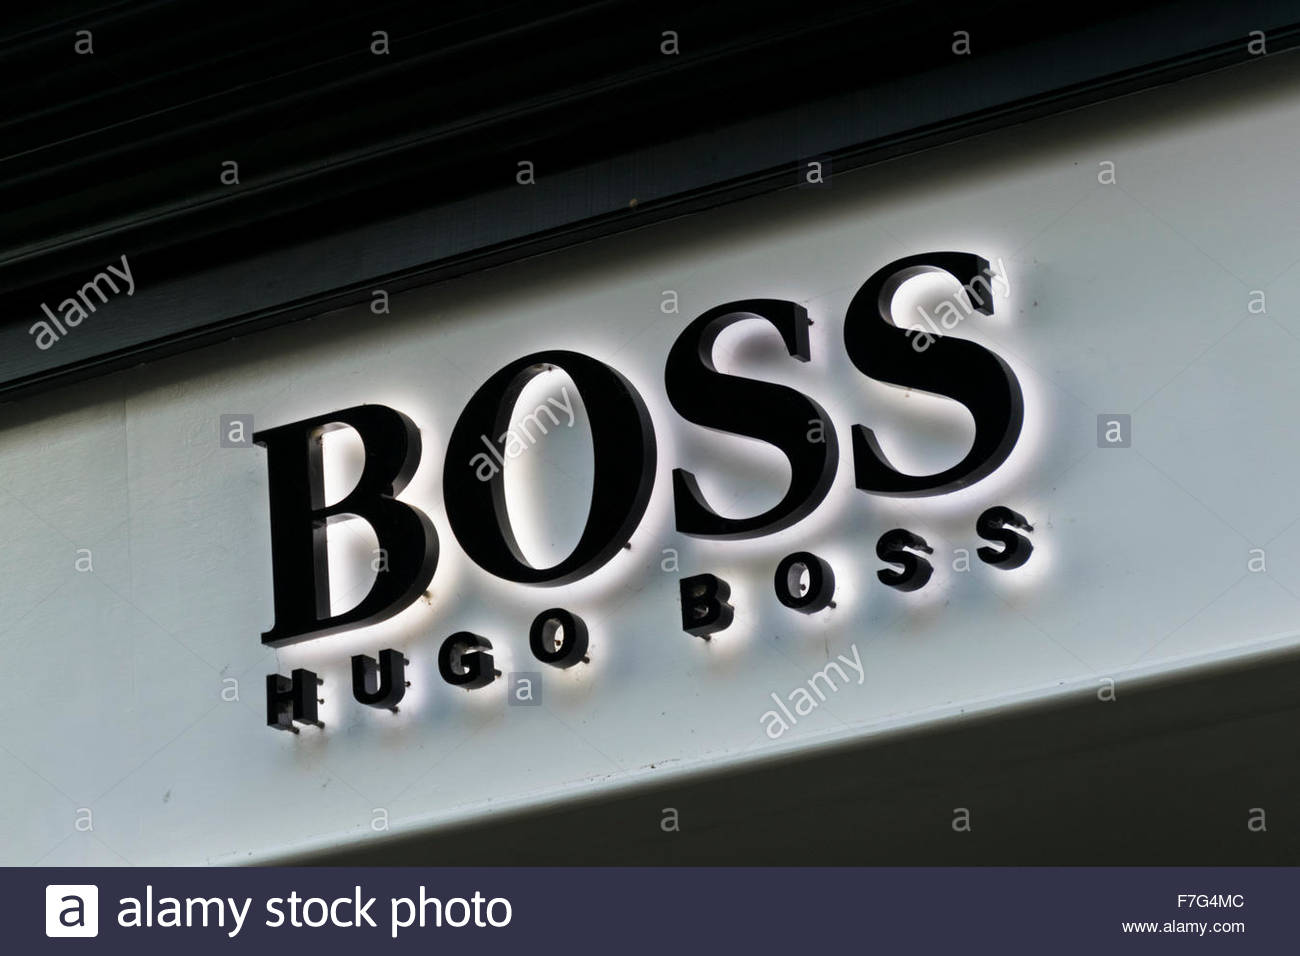 Hugo Boss sign on a shop in Cambridge 